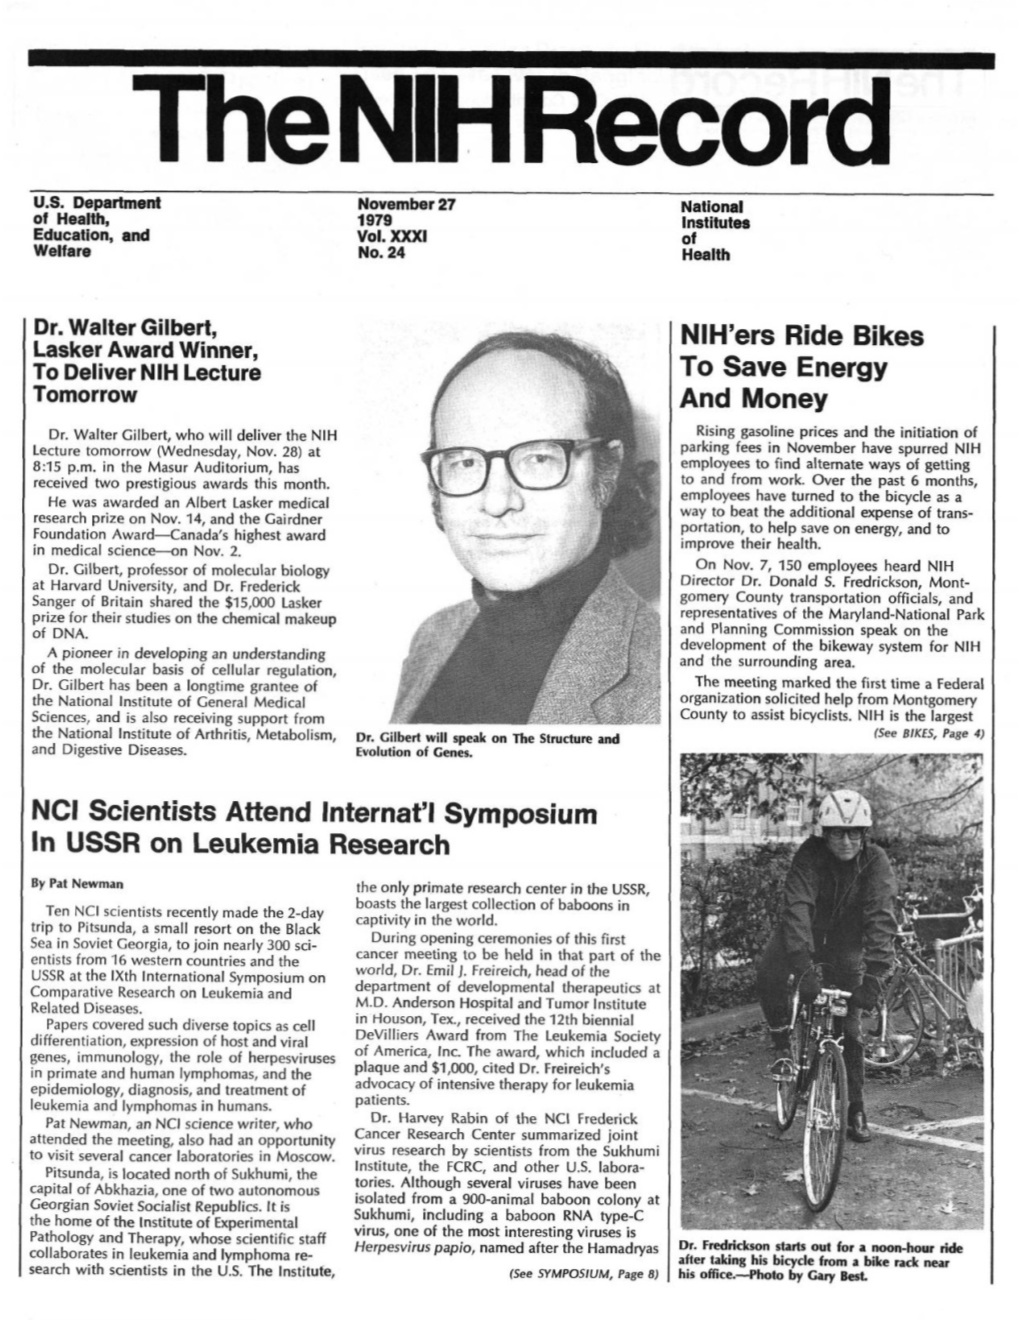 November 27, 1979, NIH Record, Vol. XXXI, No. 24